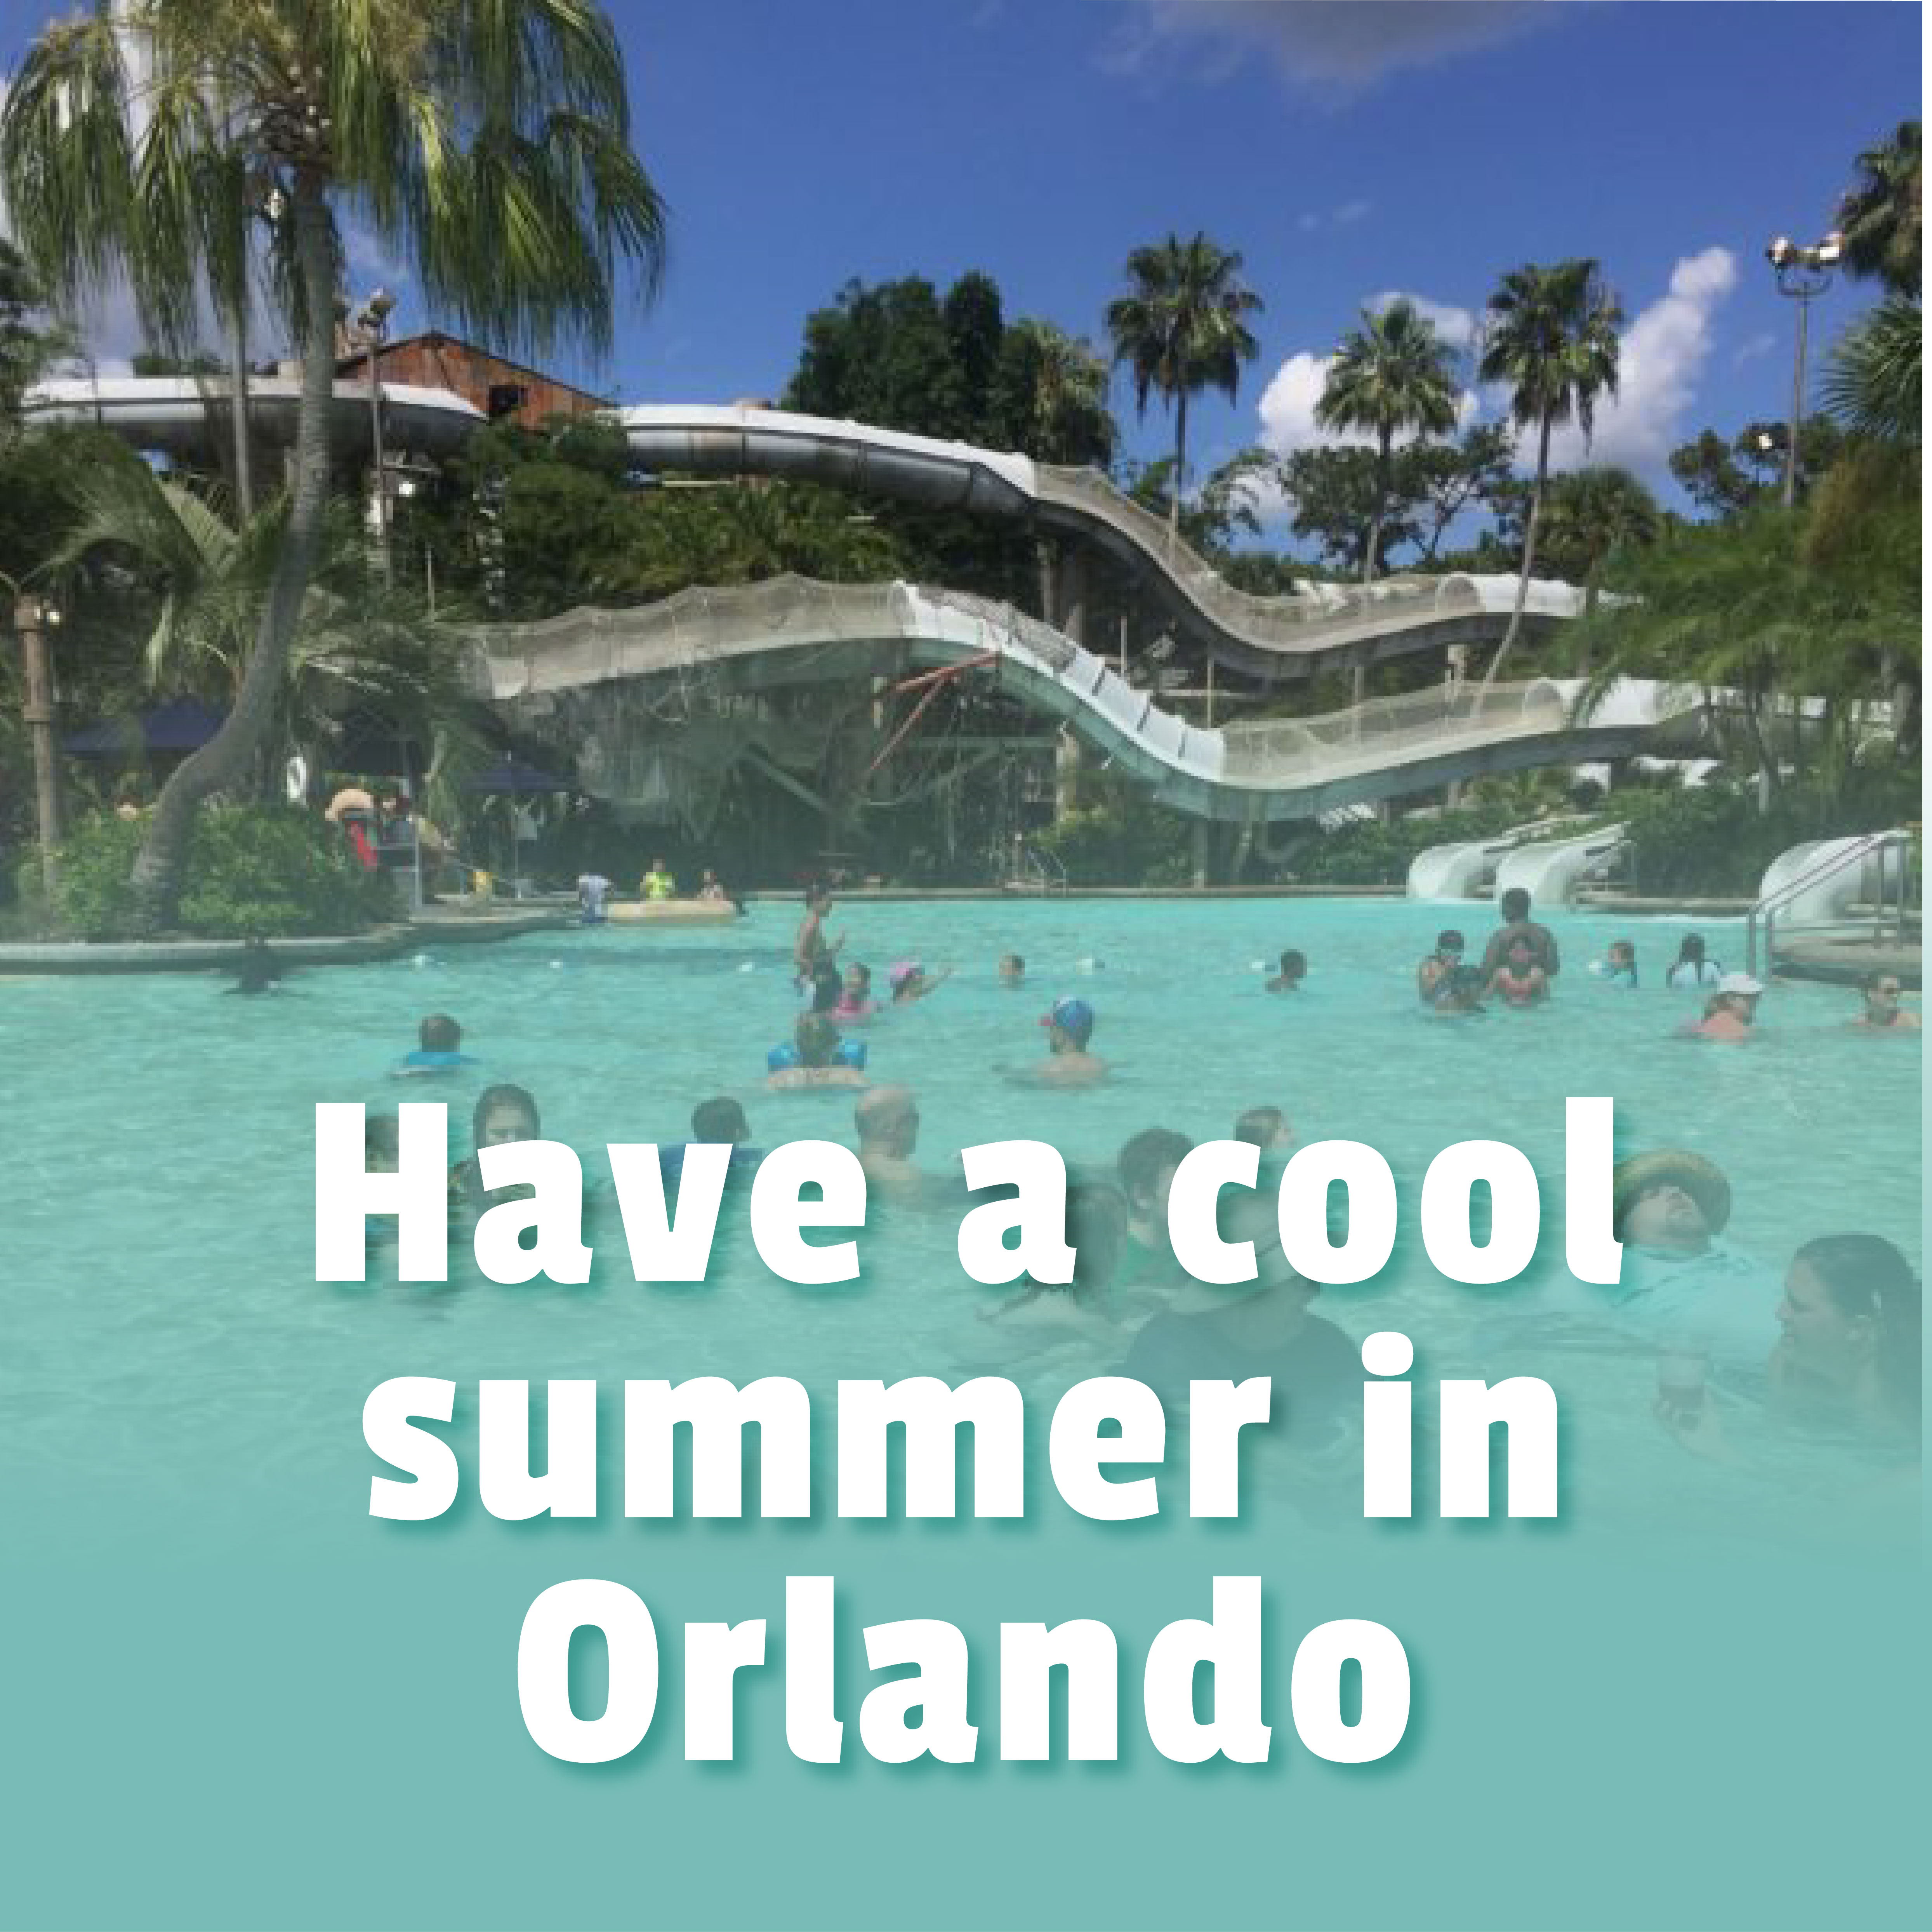 StaySky Suites I - Drive - Orlando Resorts - CoolSummer